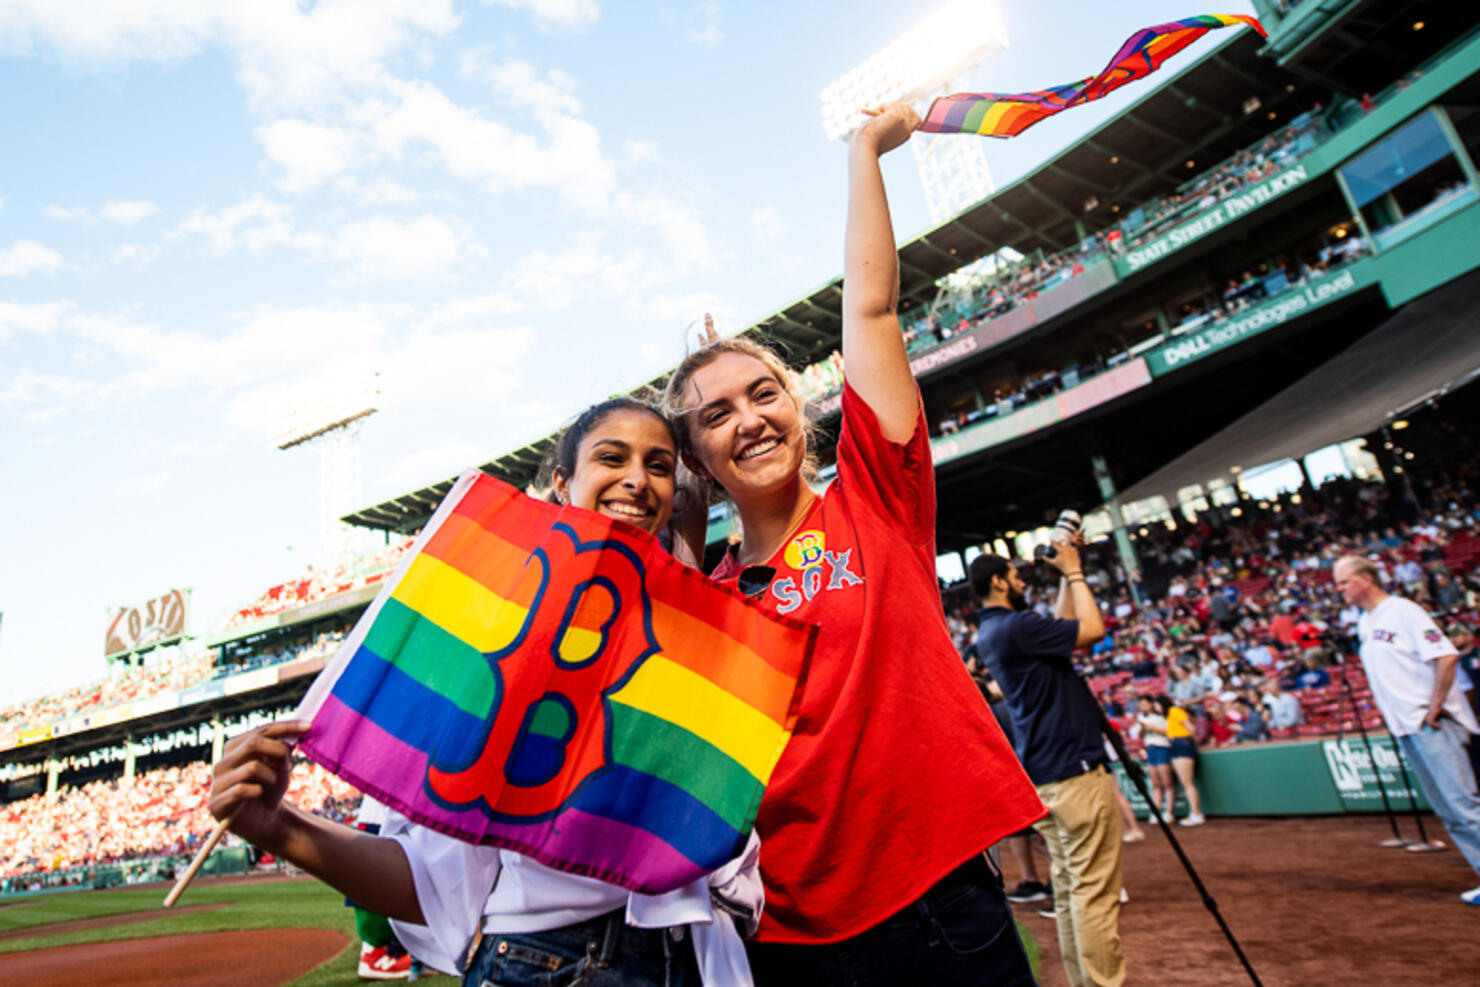 MLB Celebrates Pride iHeart